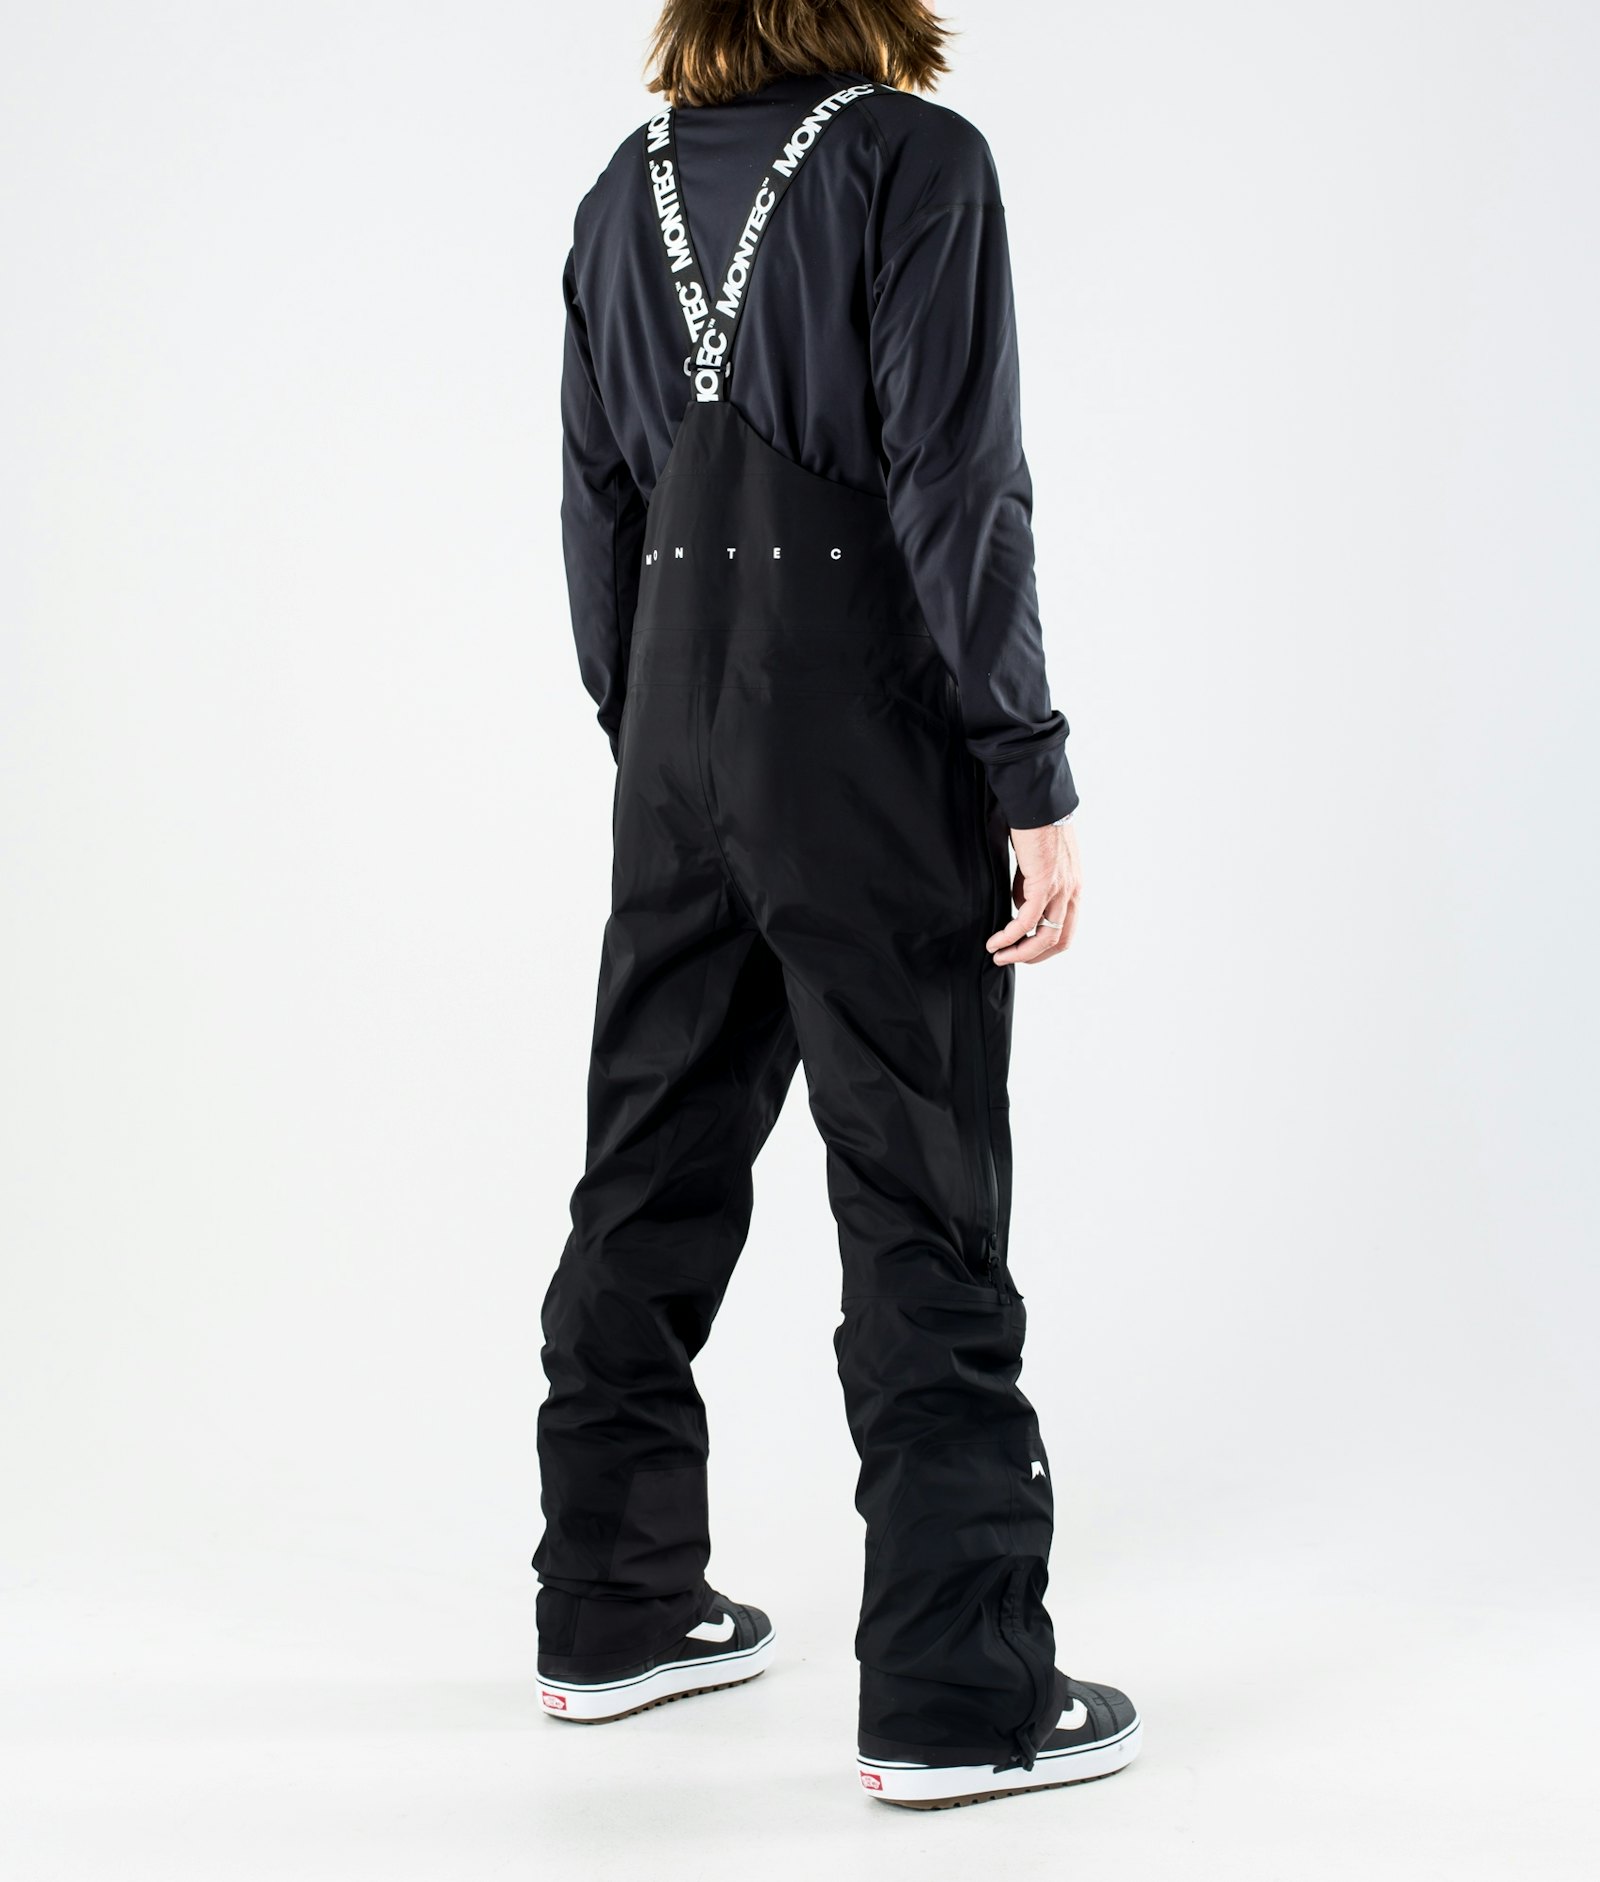 Fenix 3L Pantalon de Snowboard Homme Black